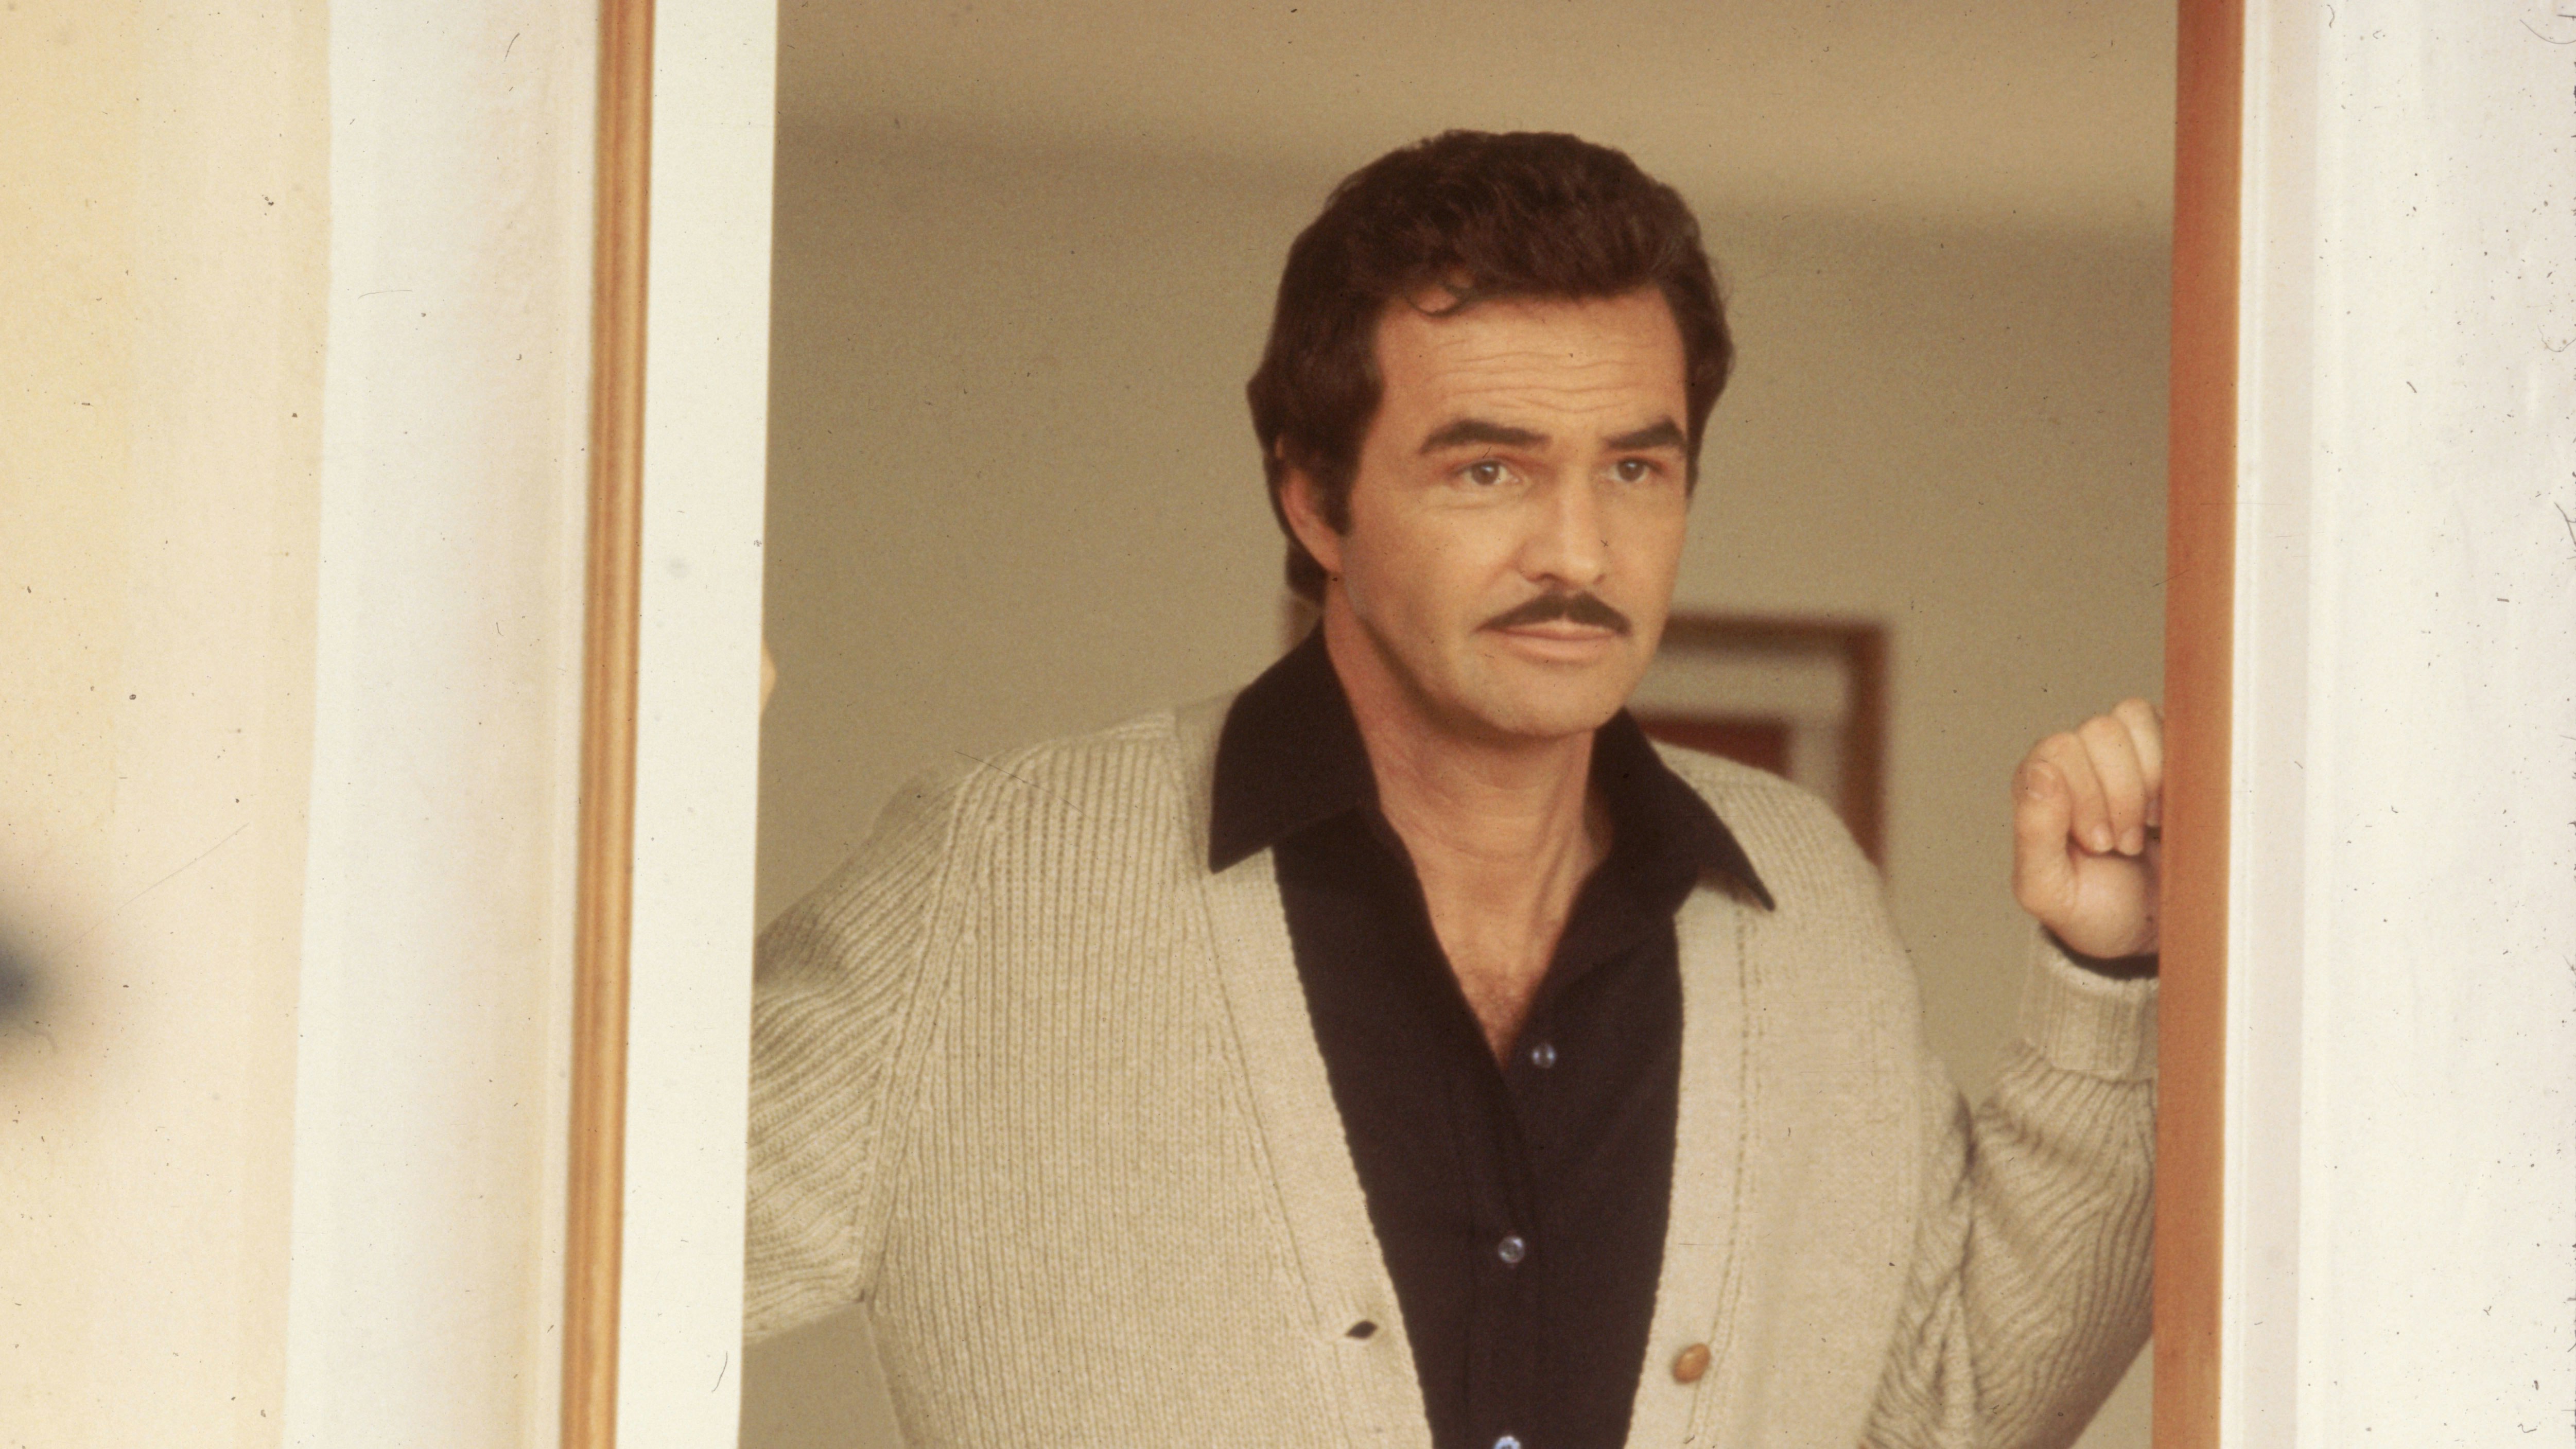 Burt Reynolds: the good ol' boy, Movies